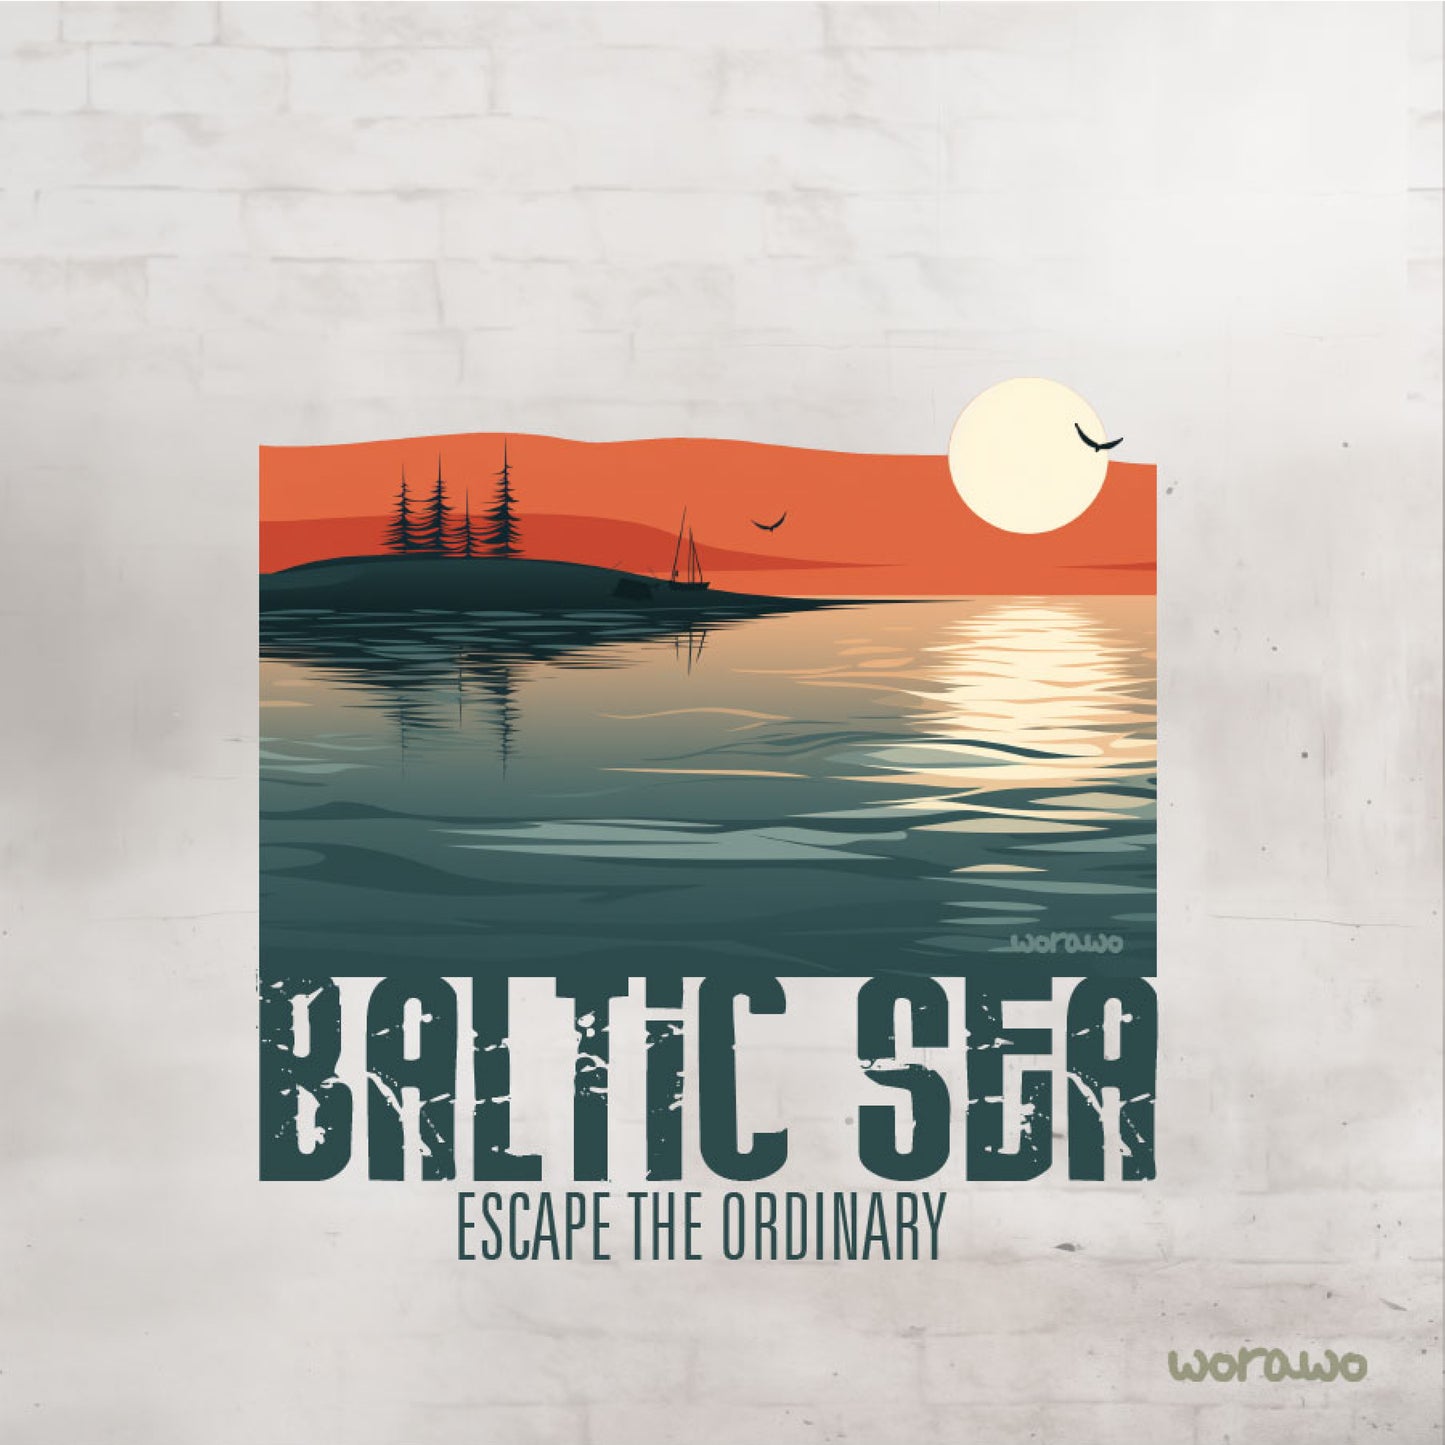 Bügelbild Baltic Sea (Escape the Ordinary) 4